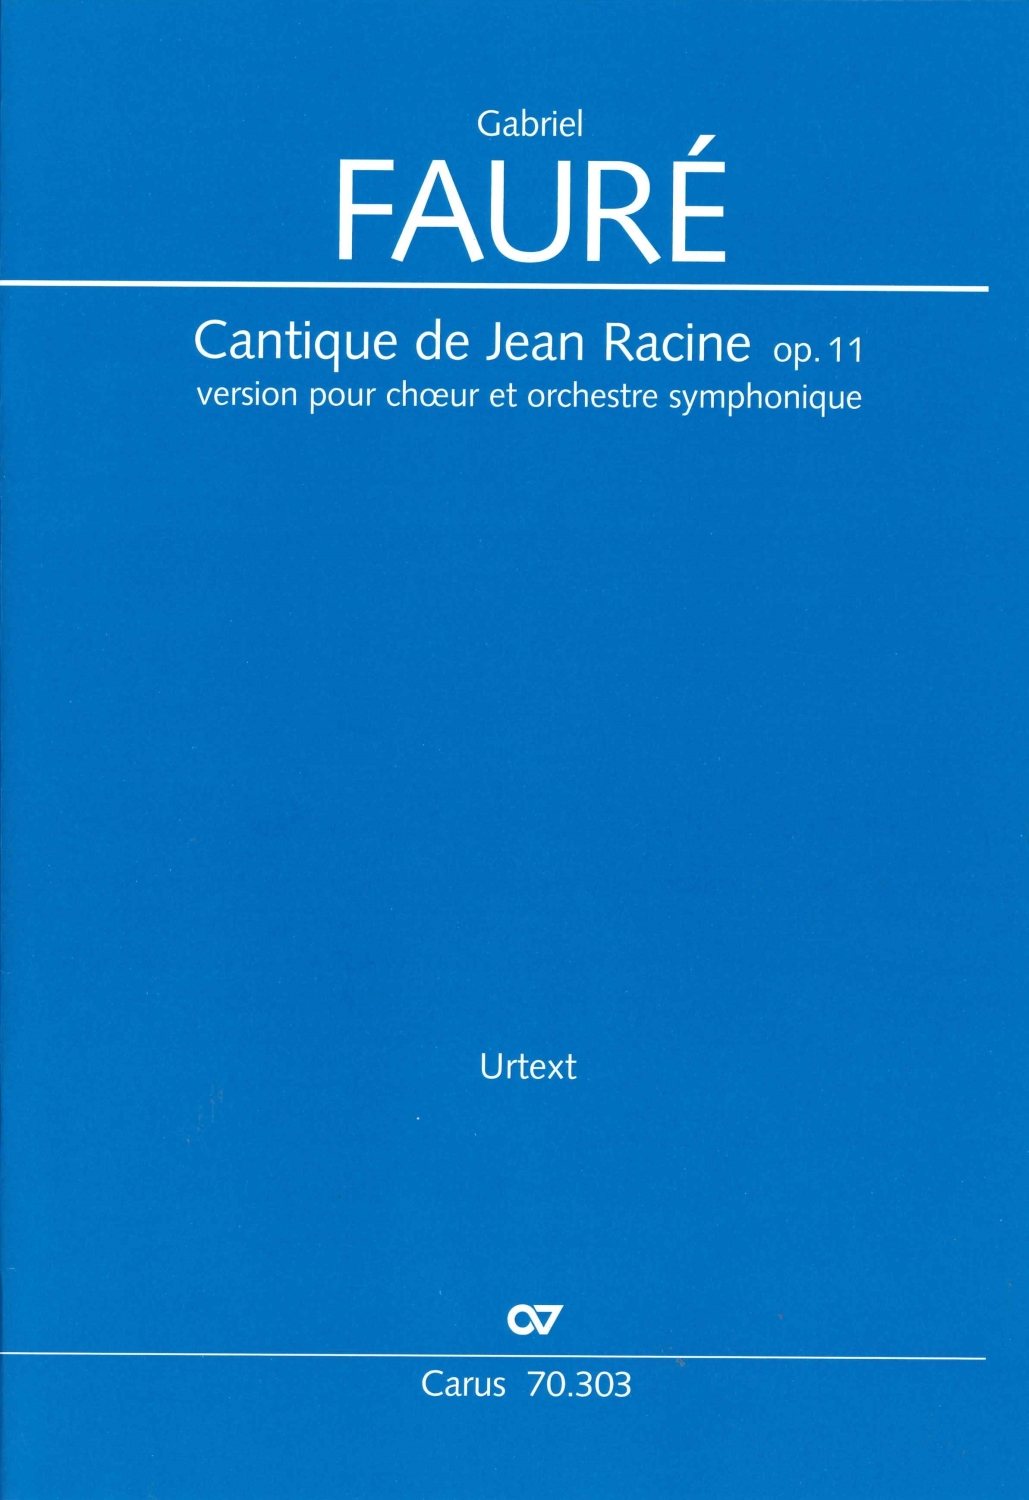 gabriel-faure-cantique-de-jean-racine-op-11-gch-or_0001.JPG